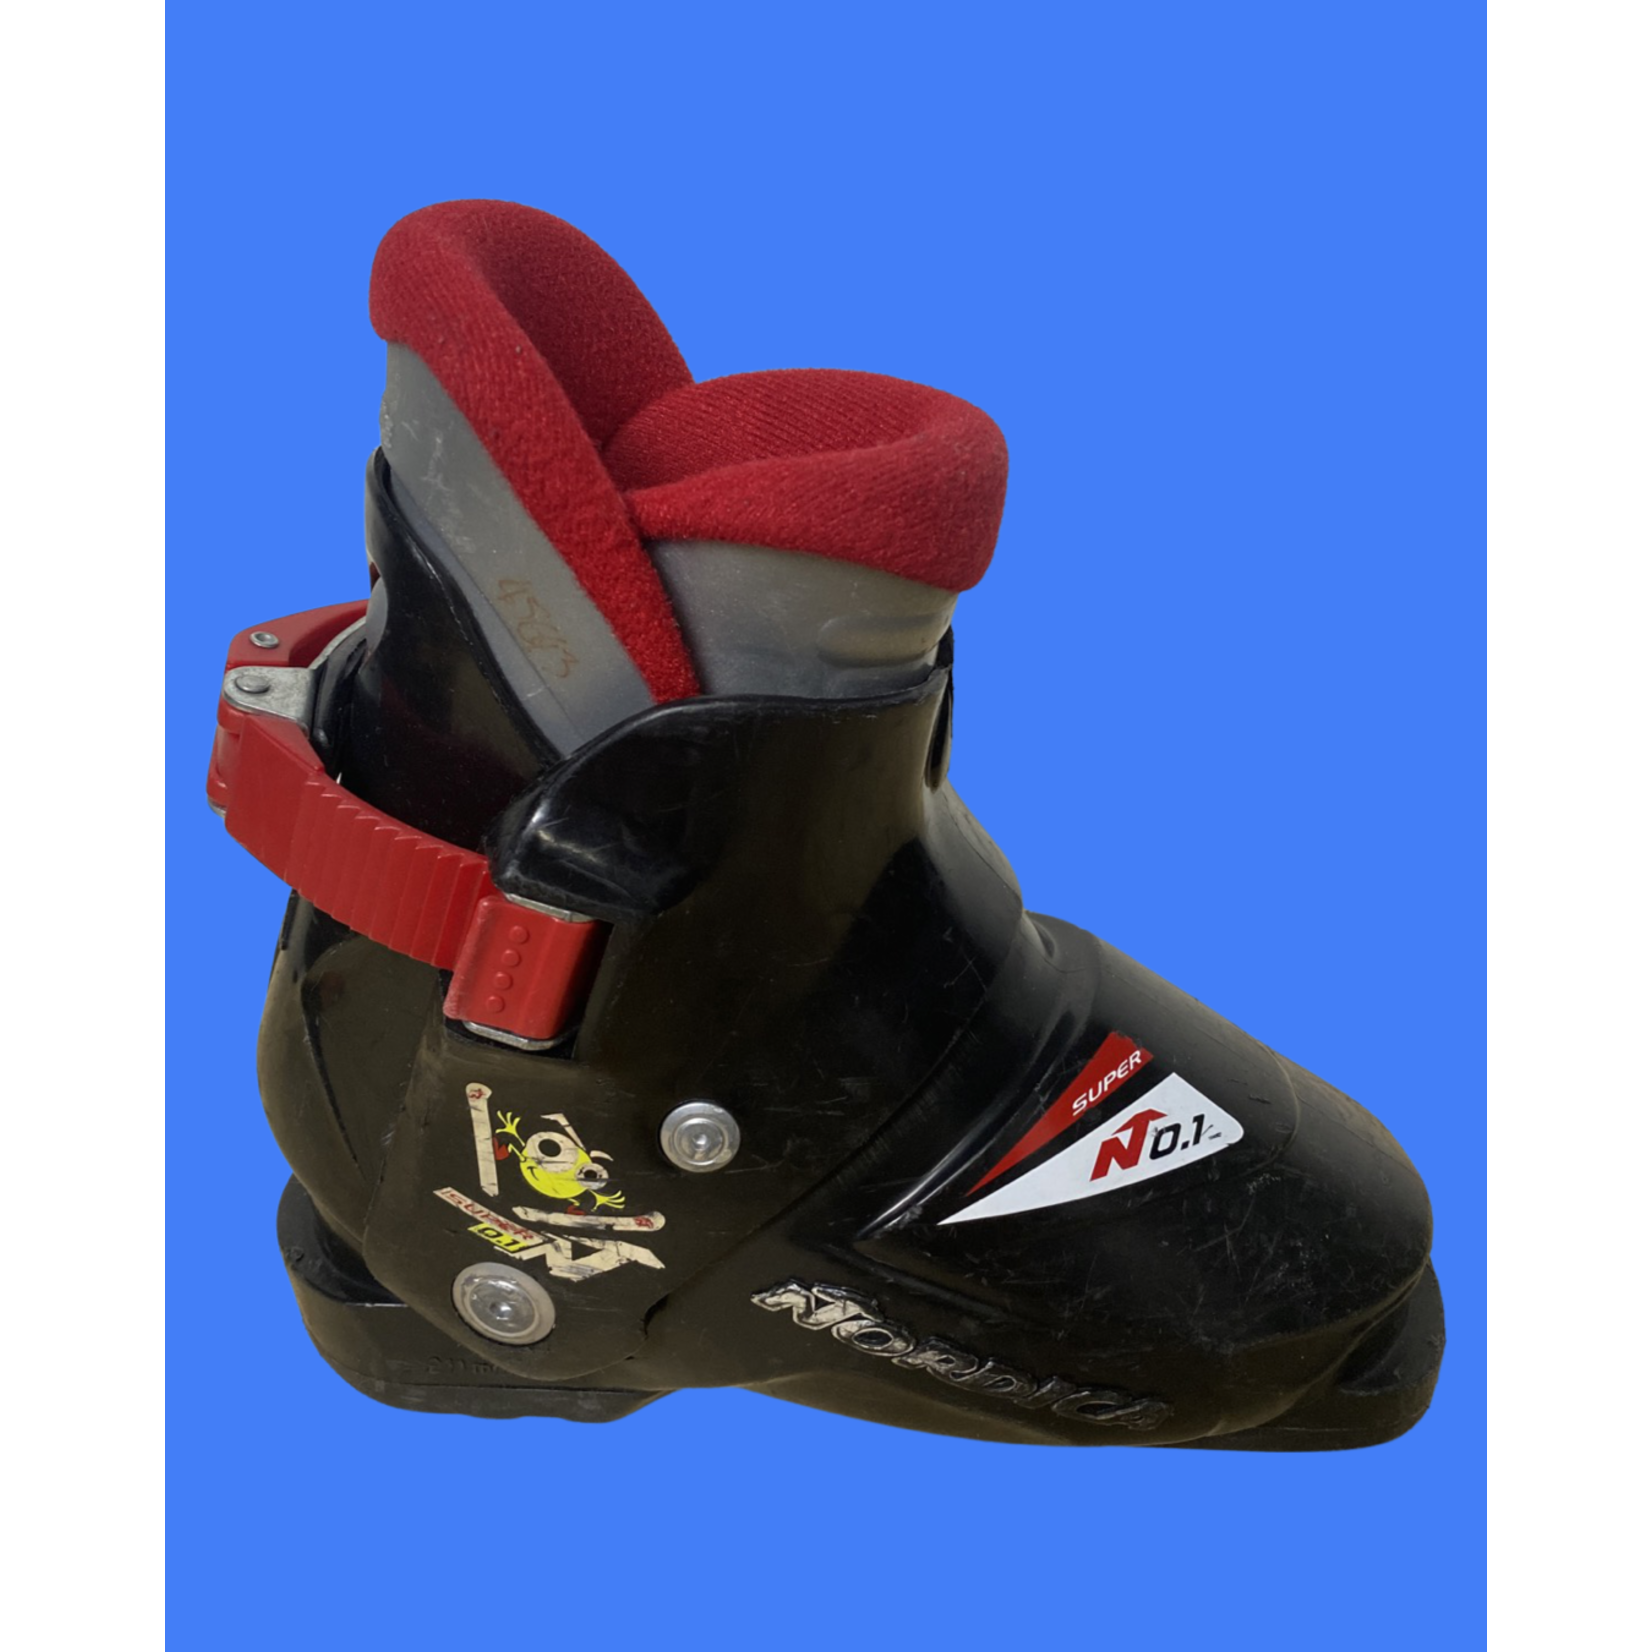 Nordica Nordica Super N 0.1 Kids Ski Boots